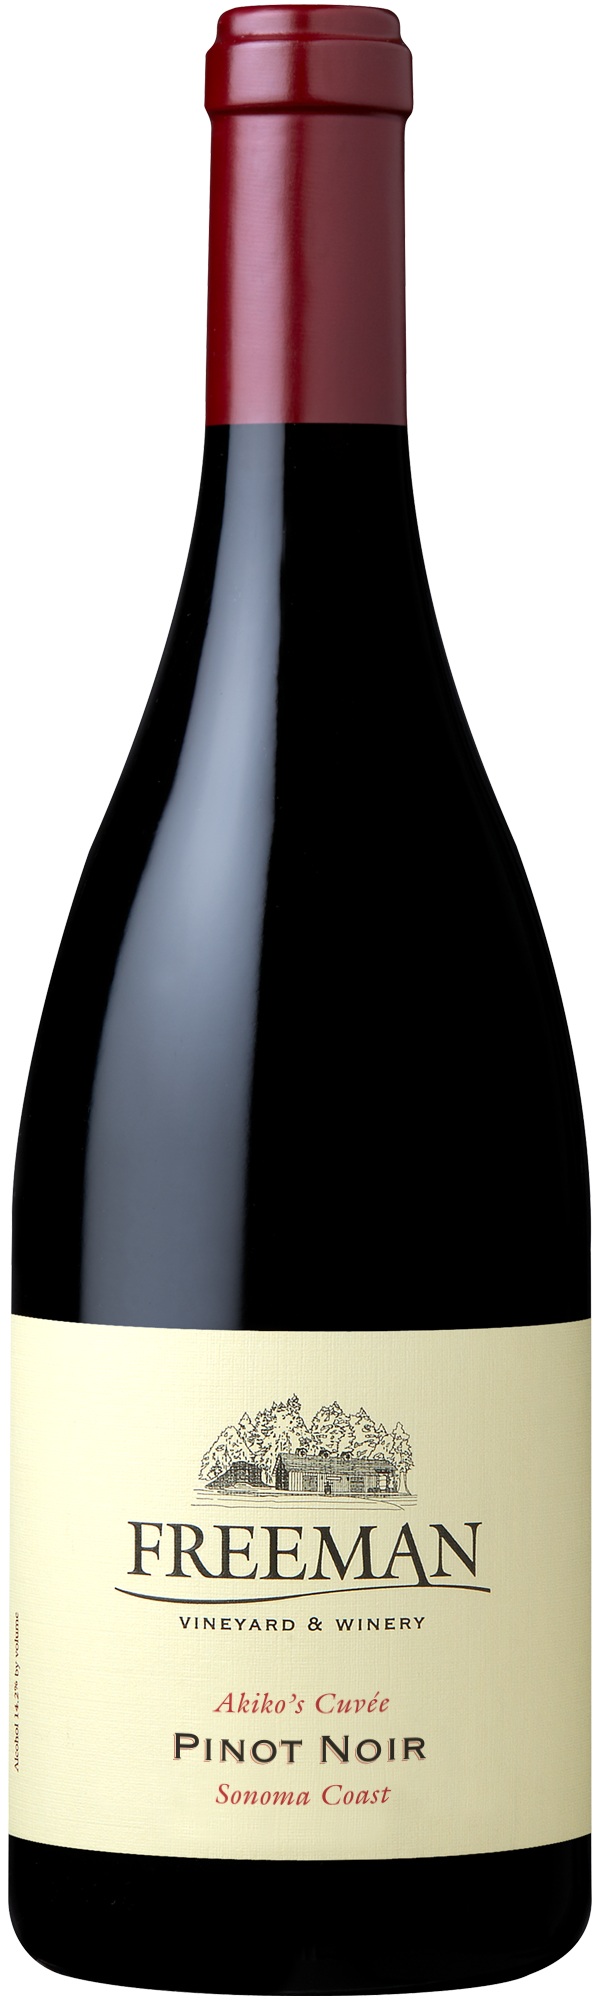 Akiko’s Cuvée Pinot Noir bottle shot